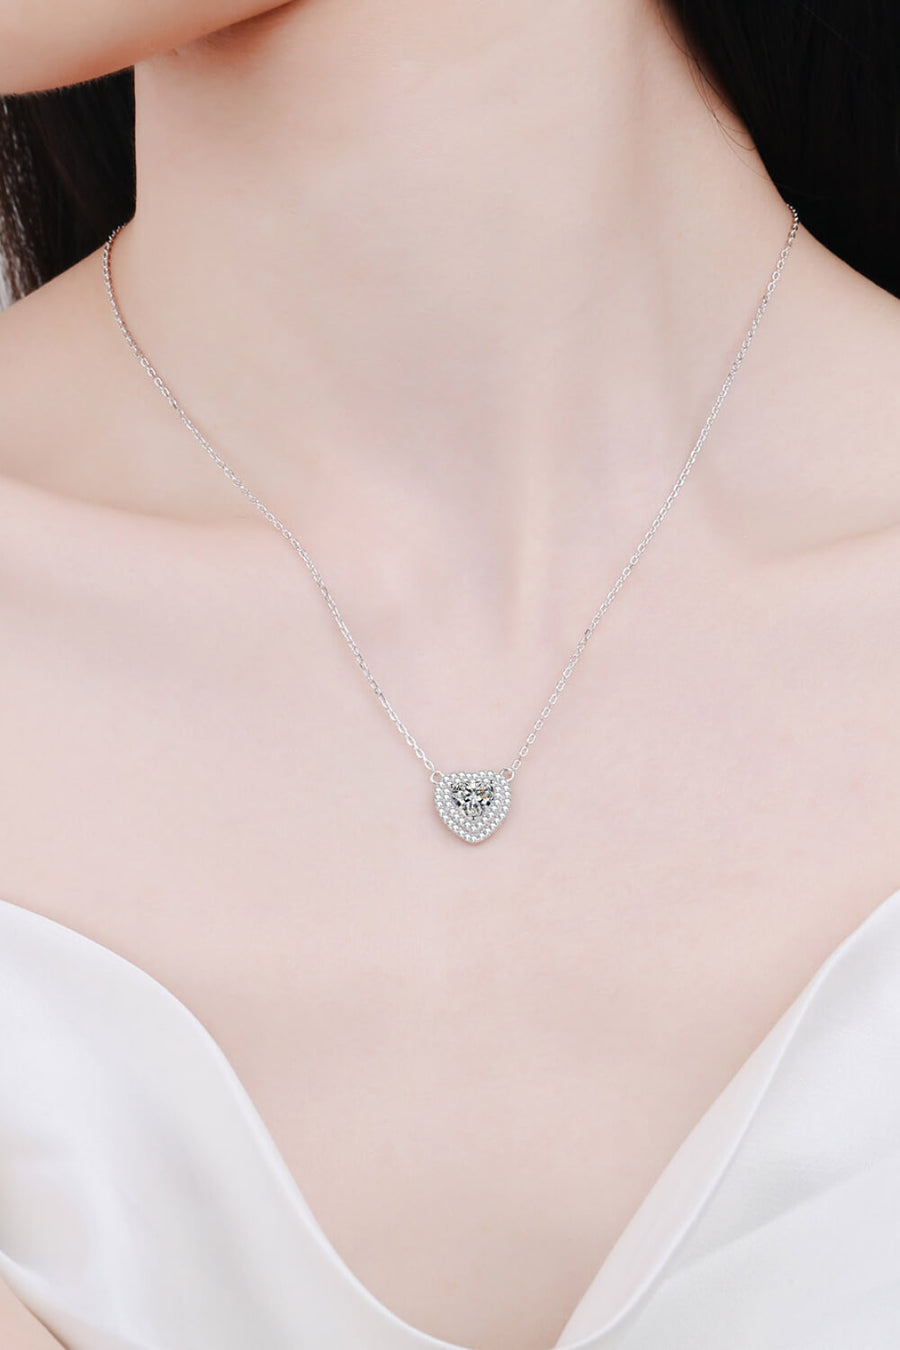 Best Diamond Necklace Jewelry Gifts for Women | 1 Carat Heart Diamond Pendant Necklace | MASON New York